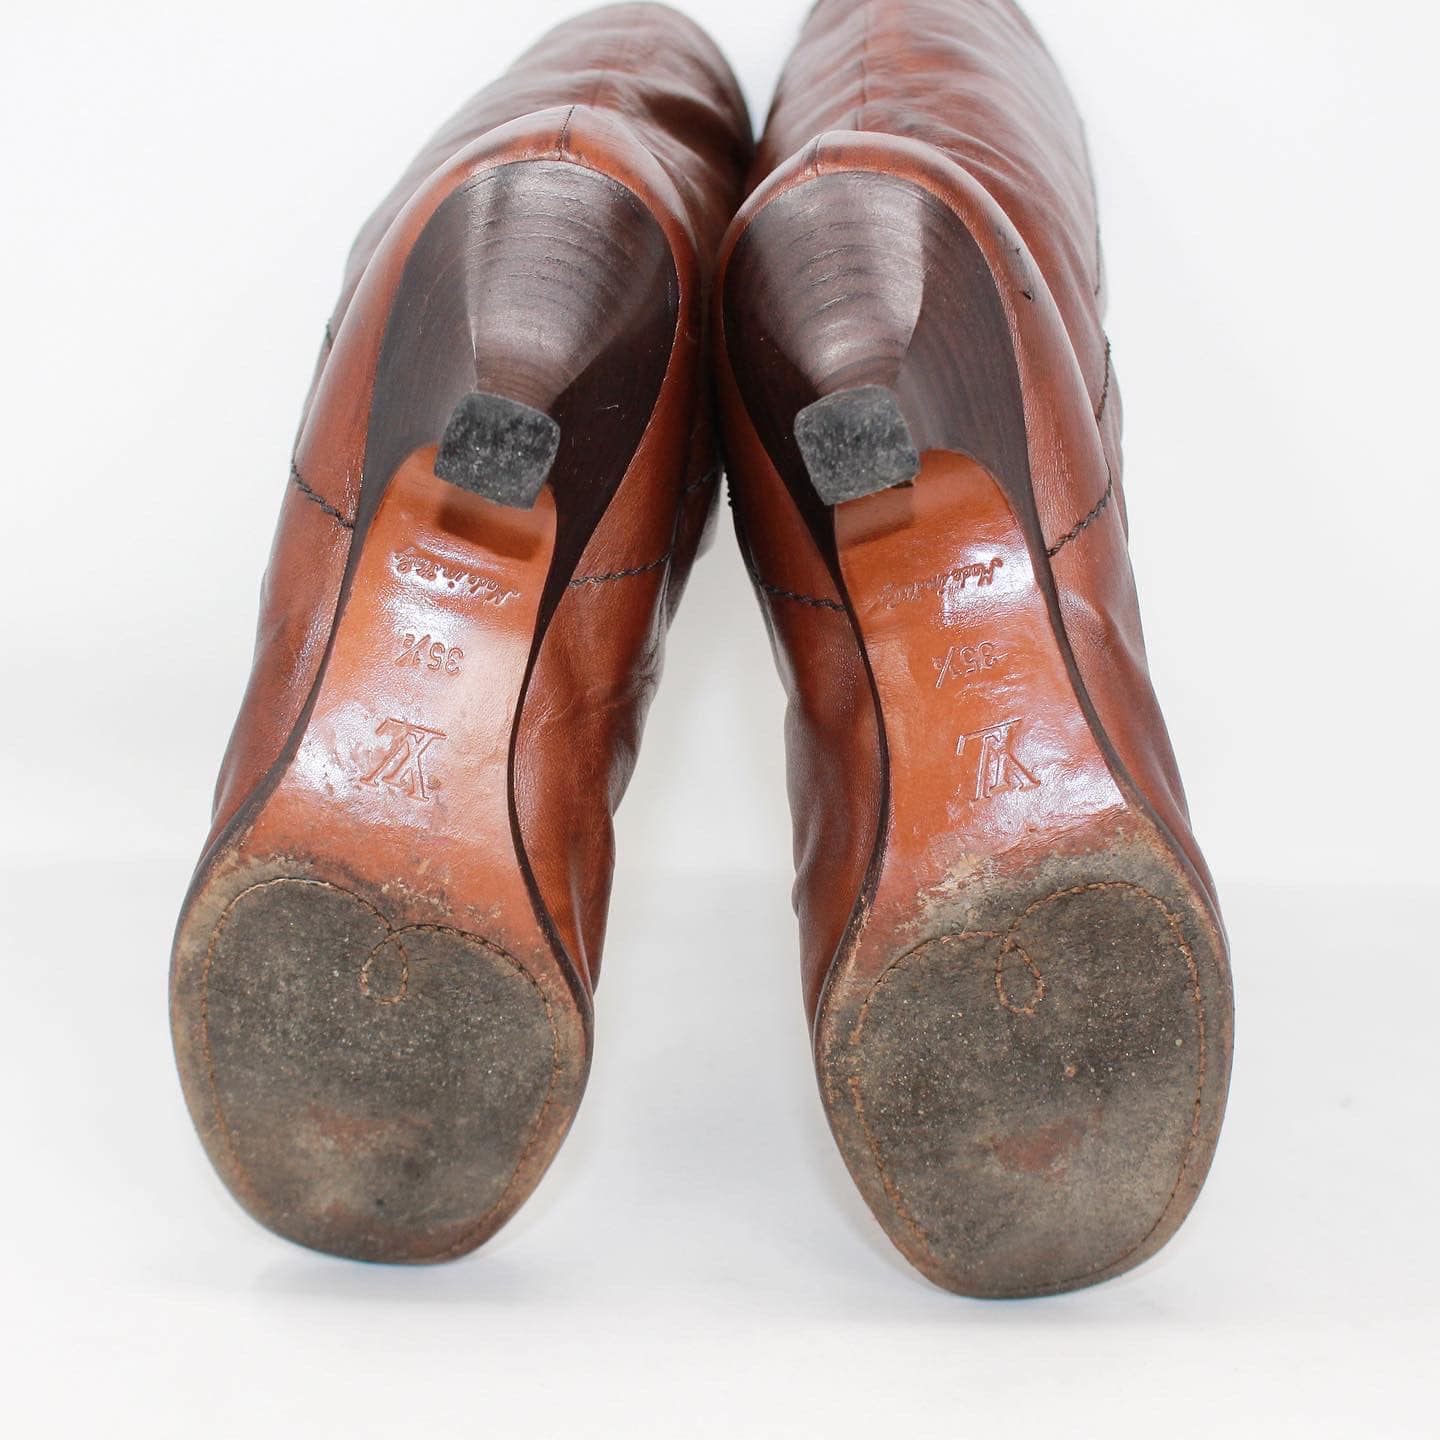 Louis Vuitton Flat Suede Boots in Brown, size EU 39 - Harrington & Co.